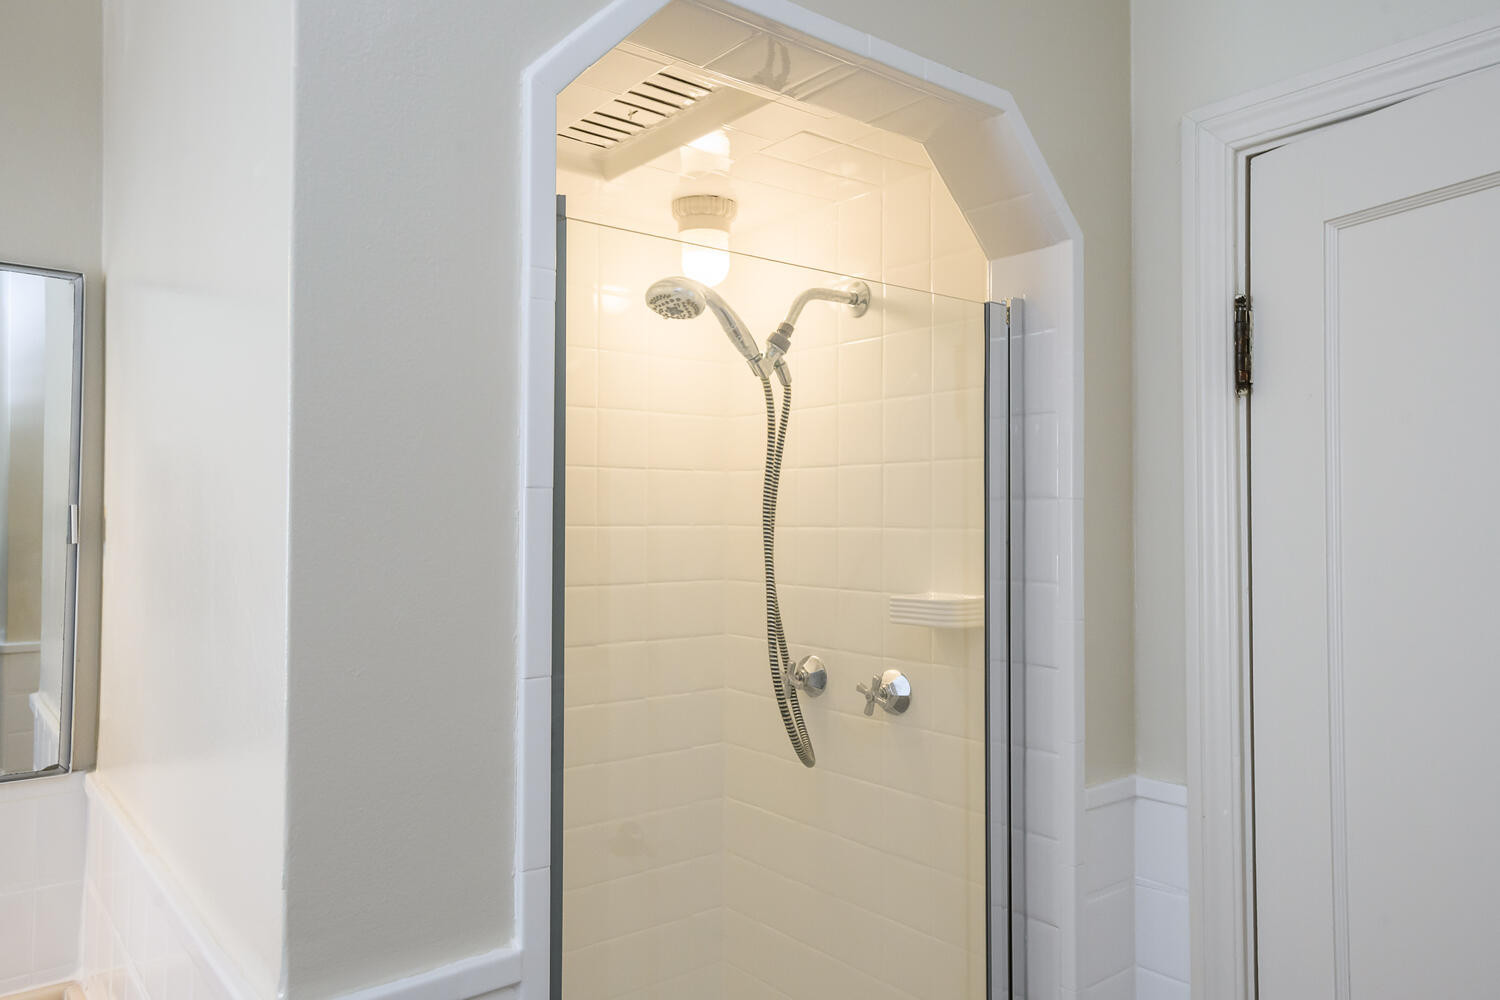 575 Palm Avenue bathroom shower head